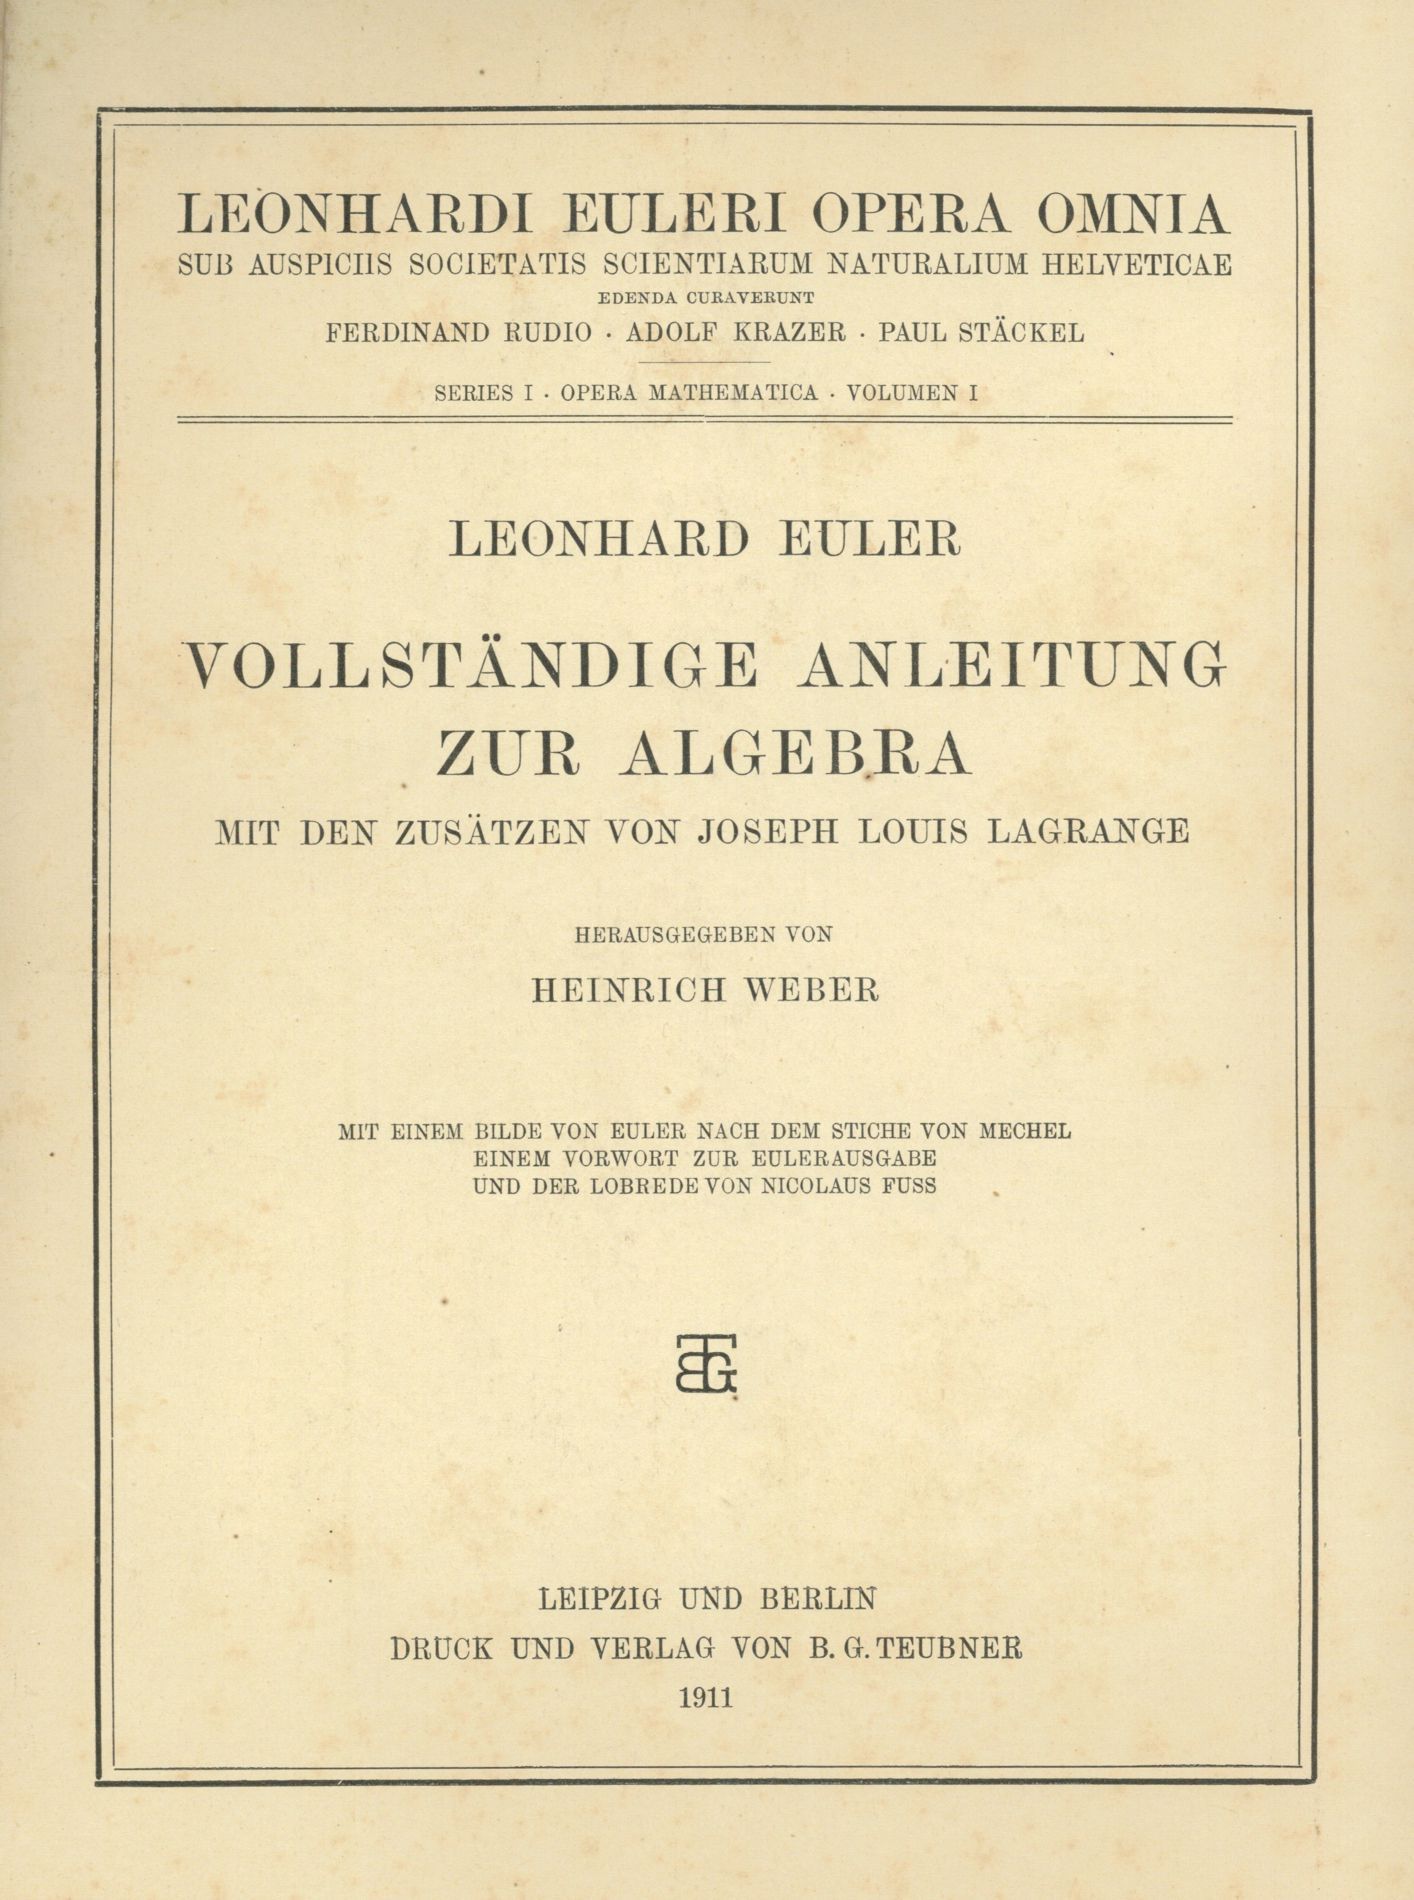 Leonhardi Euleri Opera omnia, series I / volumen 1